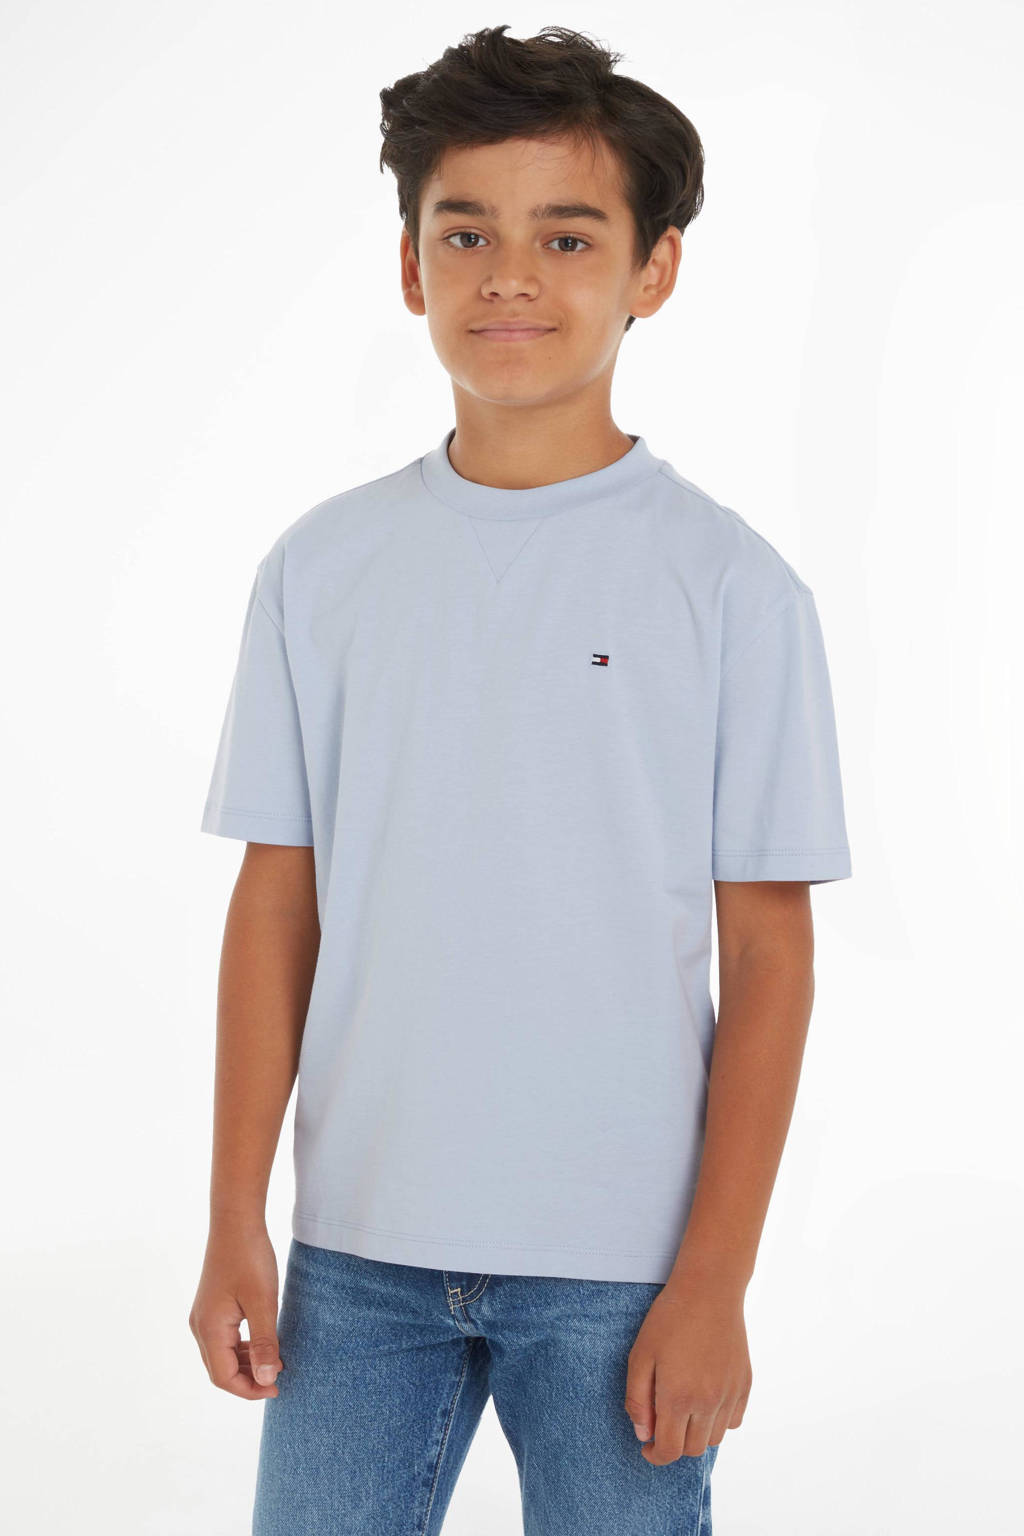 T-shirt grijsblauw